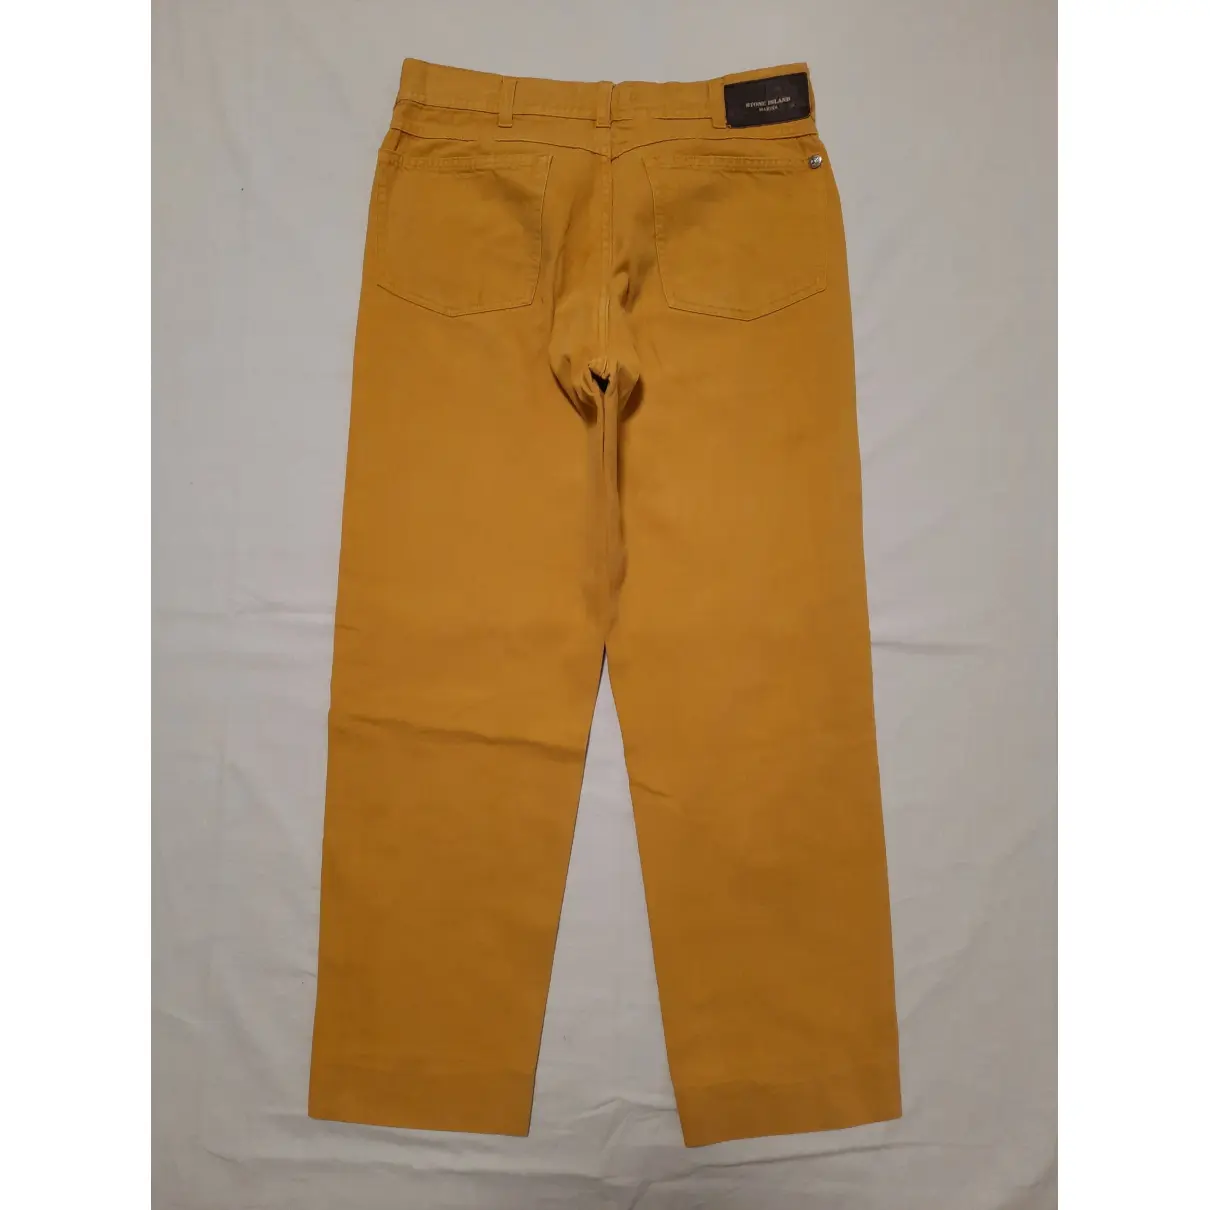 Buy Stone Island Trousers online - Vintage